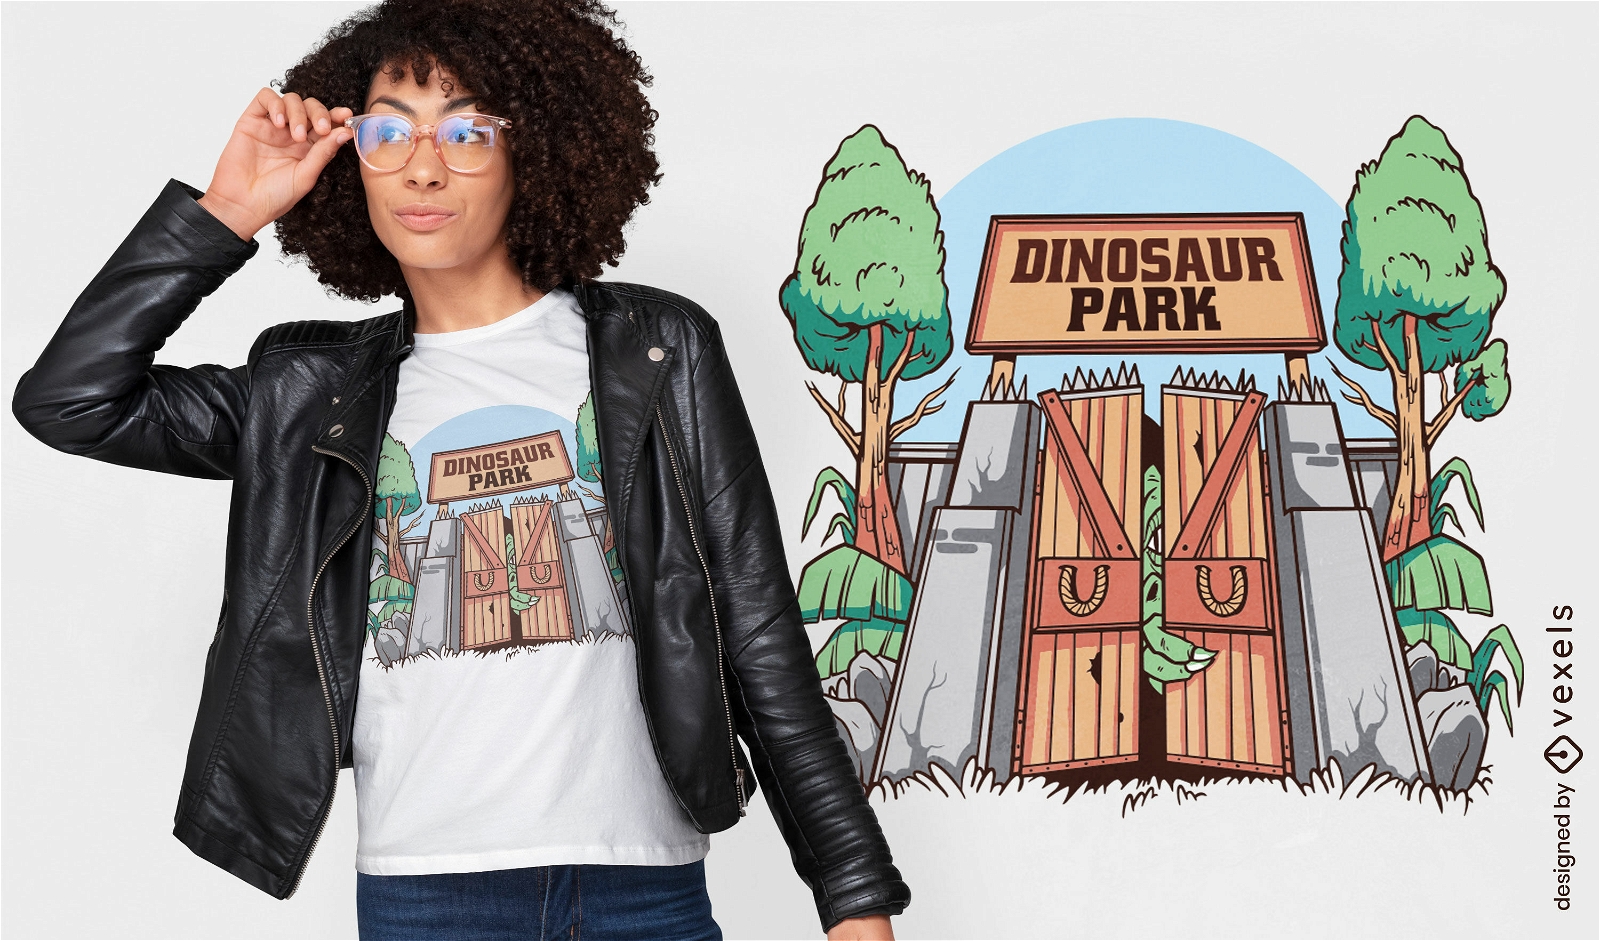 Dinosaur park door t-shirt design